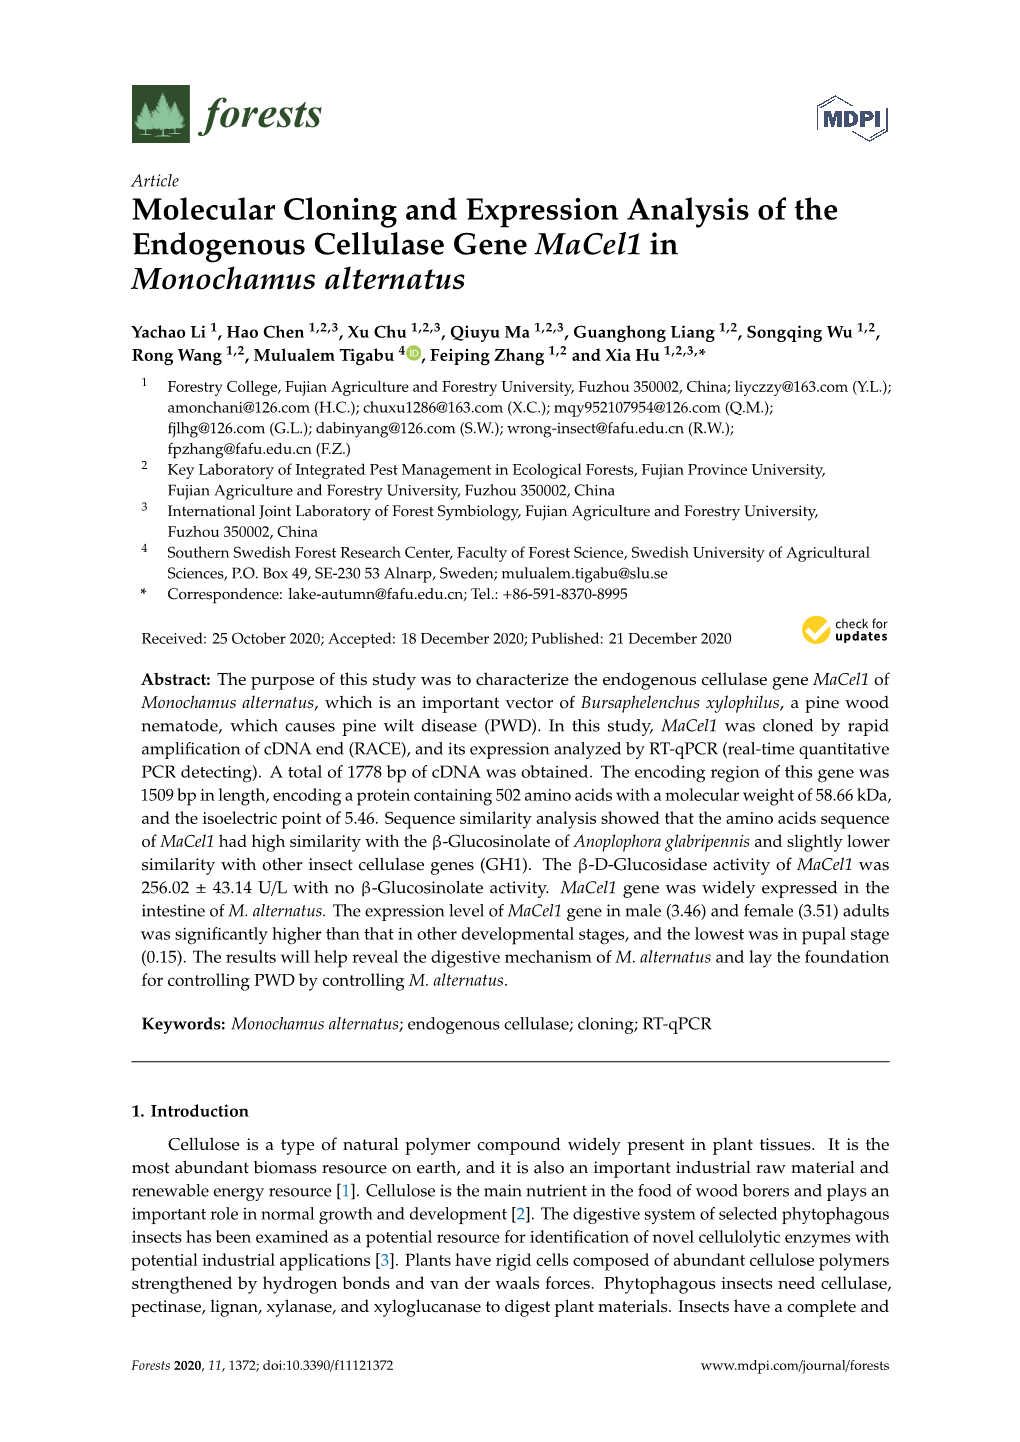 Molecular Cloning and Expression Analysis of the Endogenous Cellulase Gene Macel1 in Monochamus Alternatus